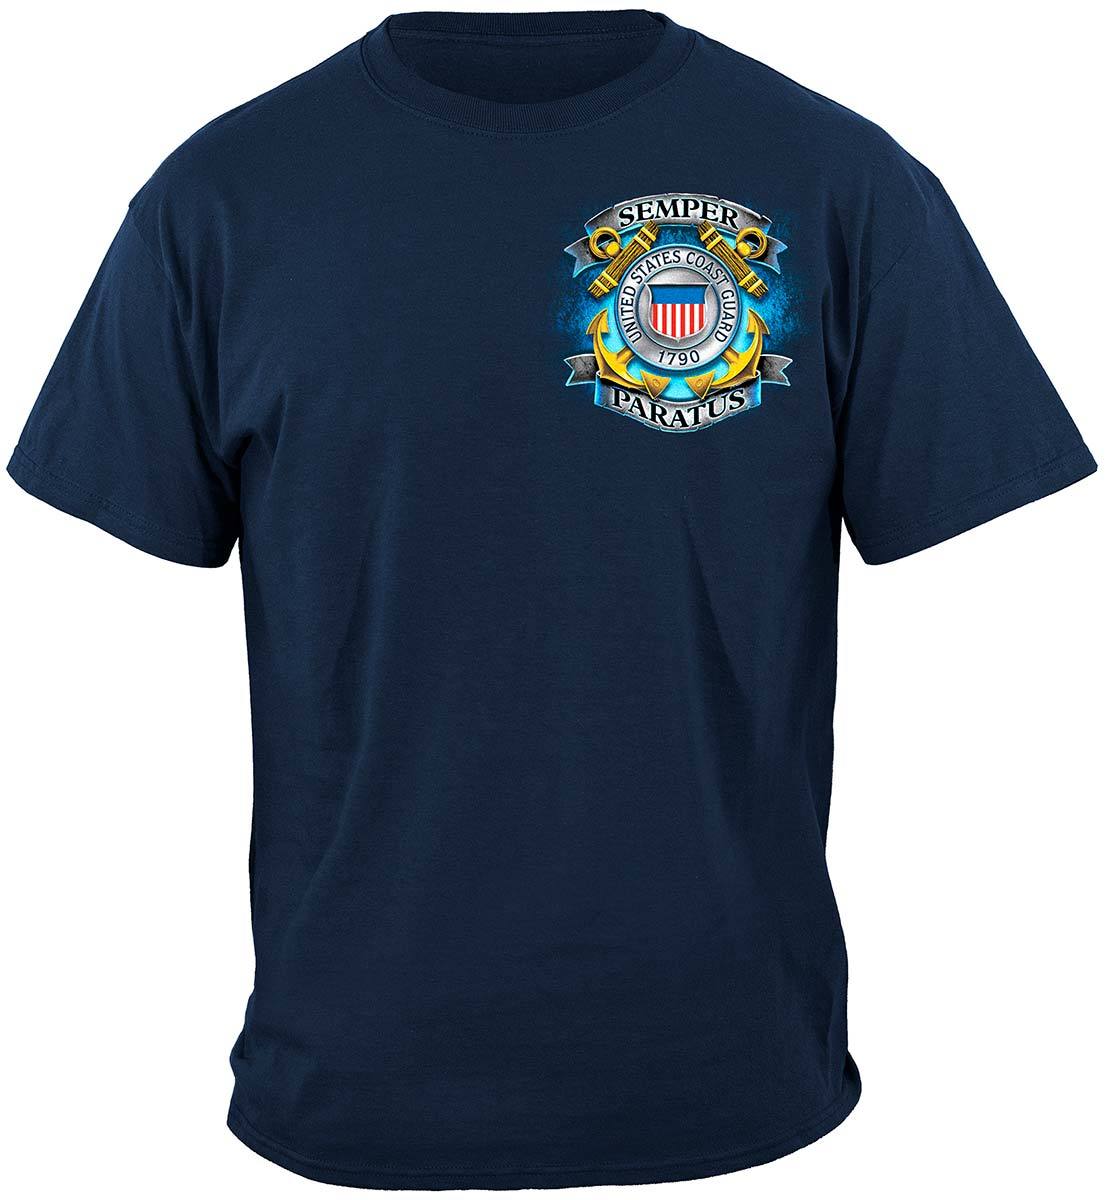 True Heroes Coast Guard Premium Hooded Sweat Shirt